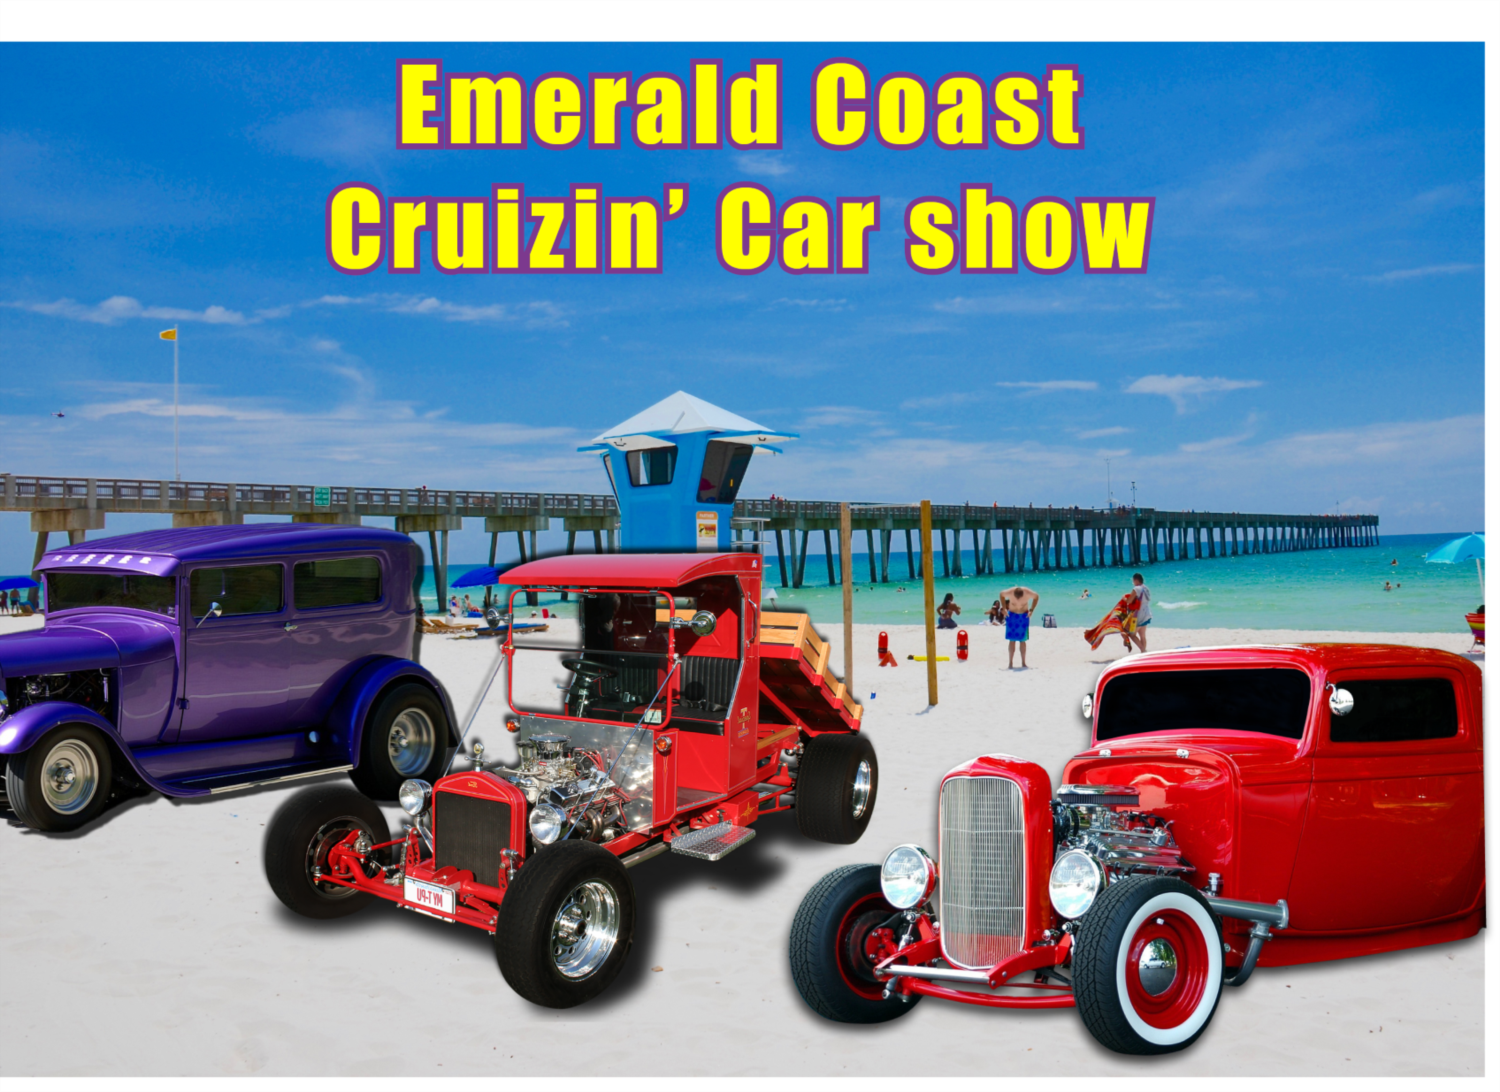 Come to the Emerald Coast Cruizin' Car Show in Panama City Beach This